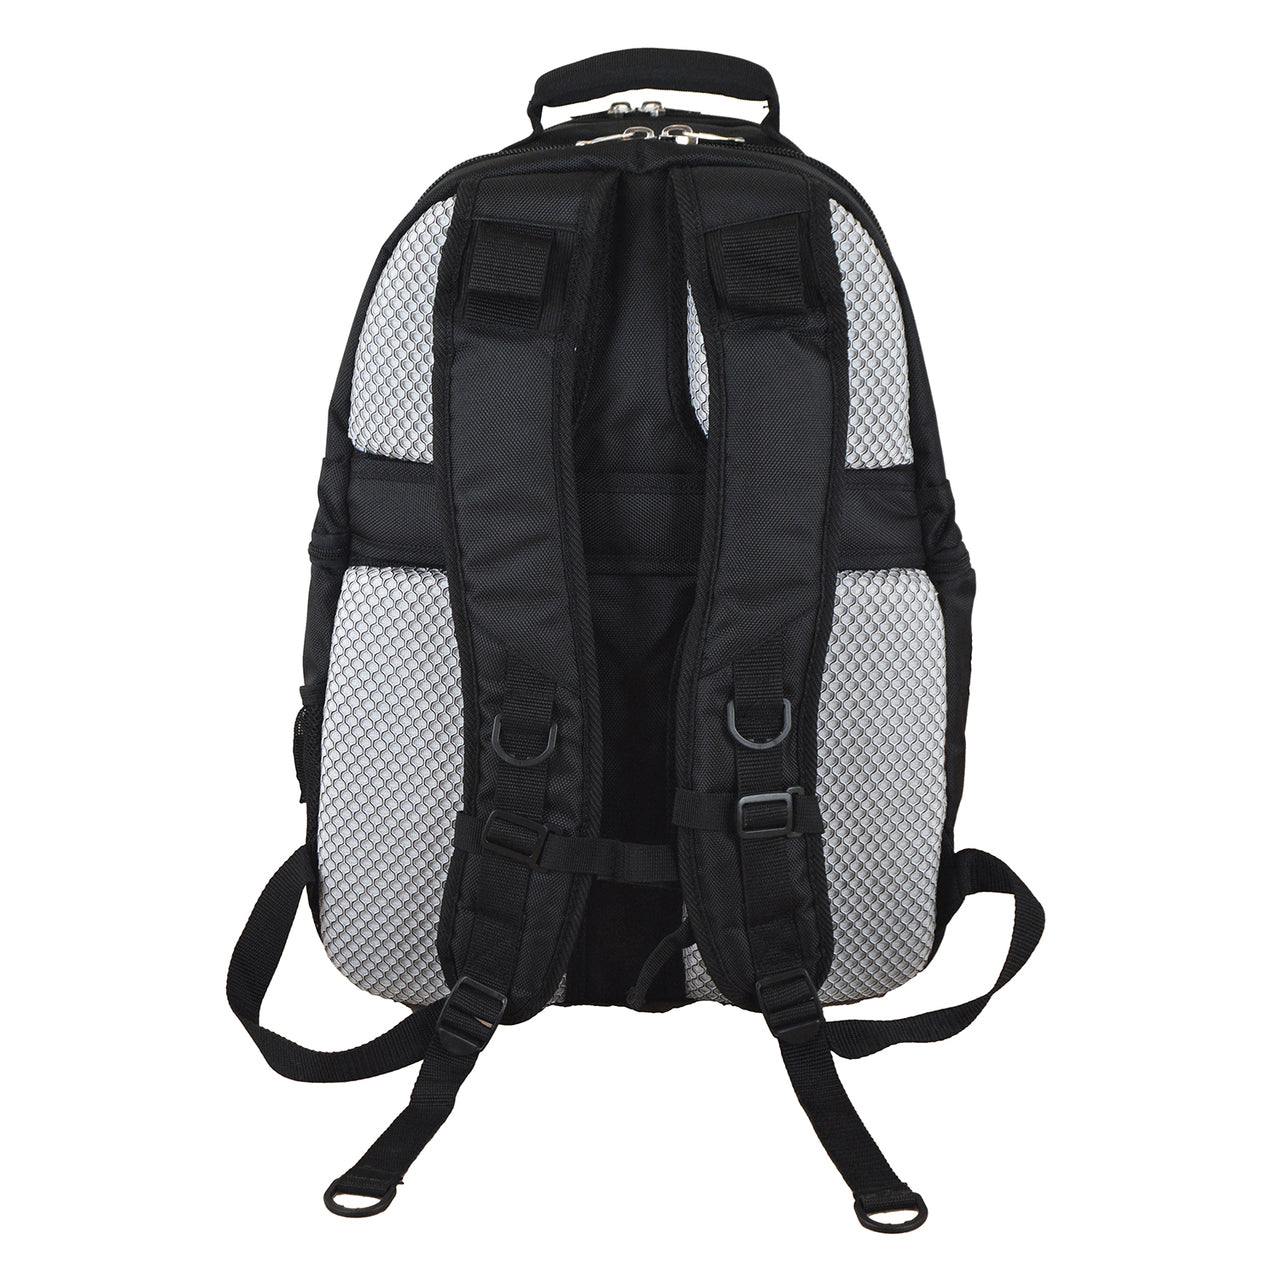 Northwestern Laptop Backpack Black